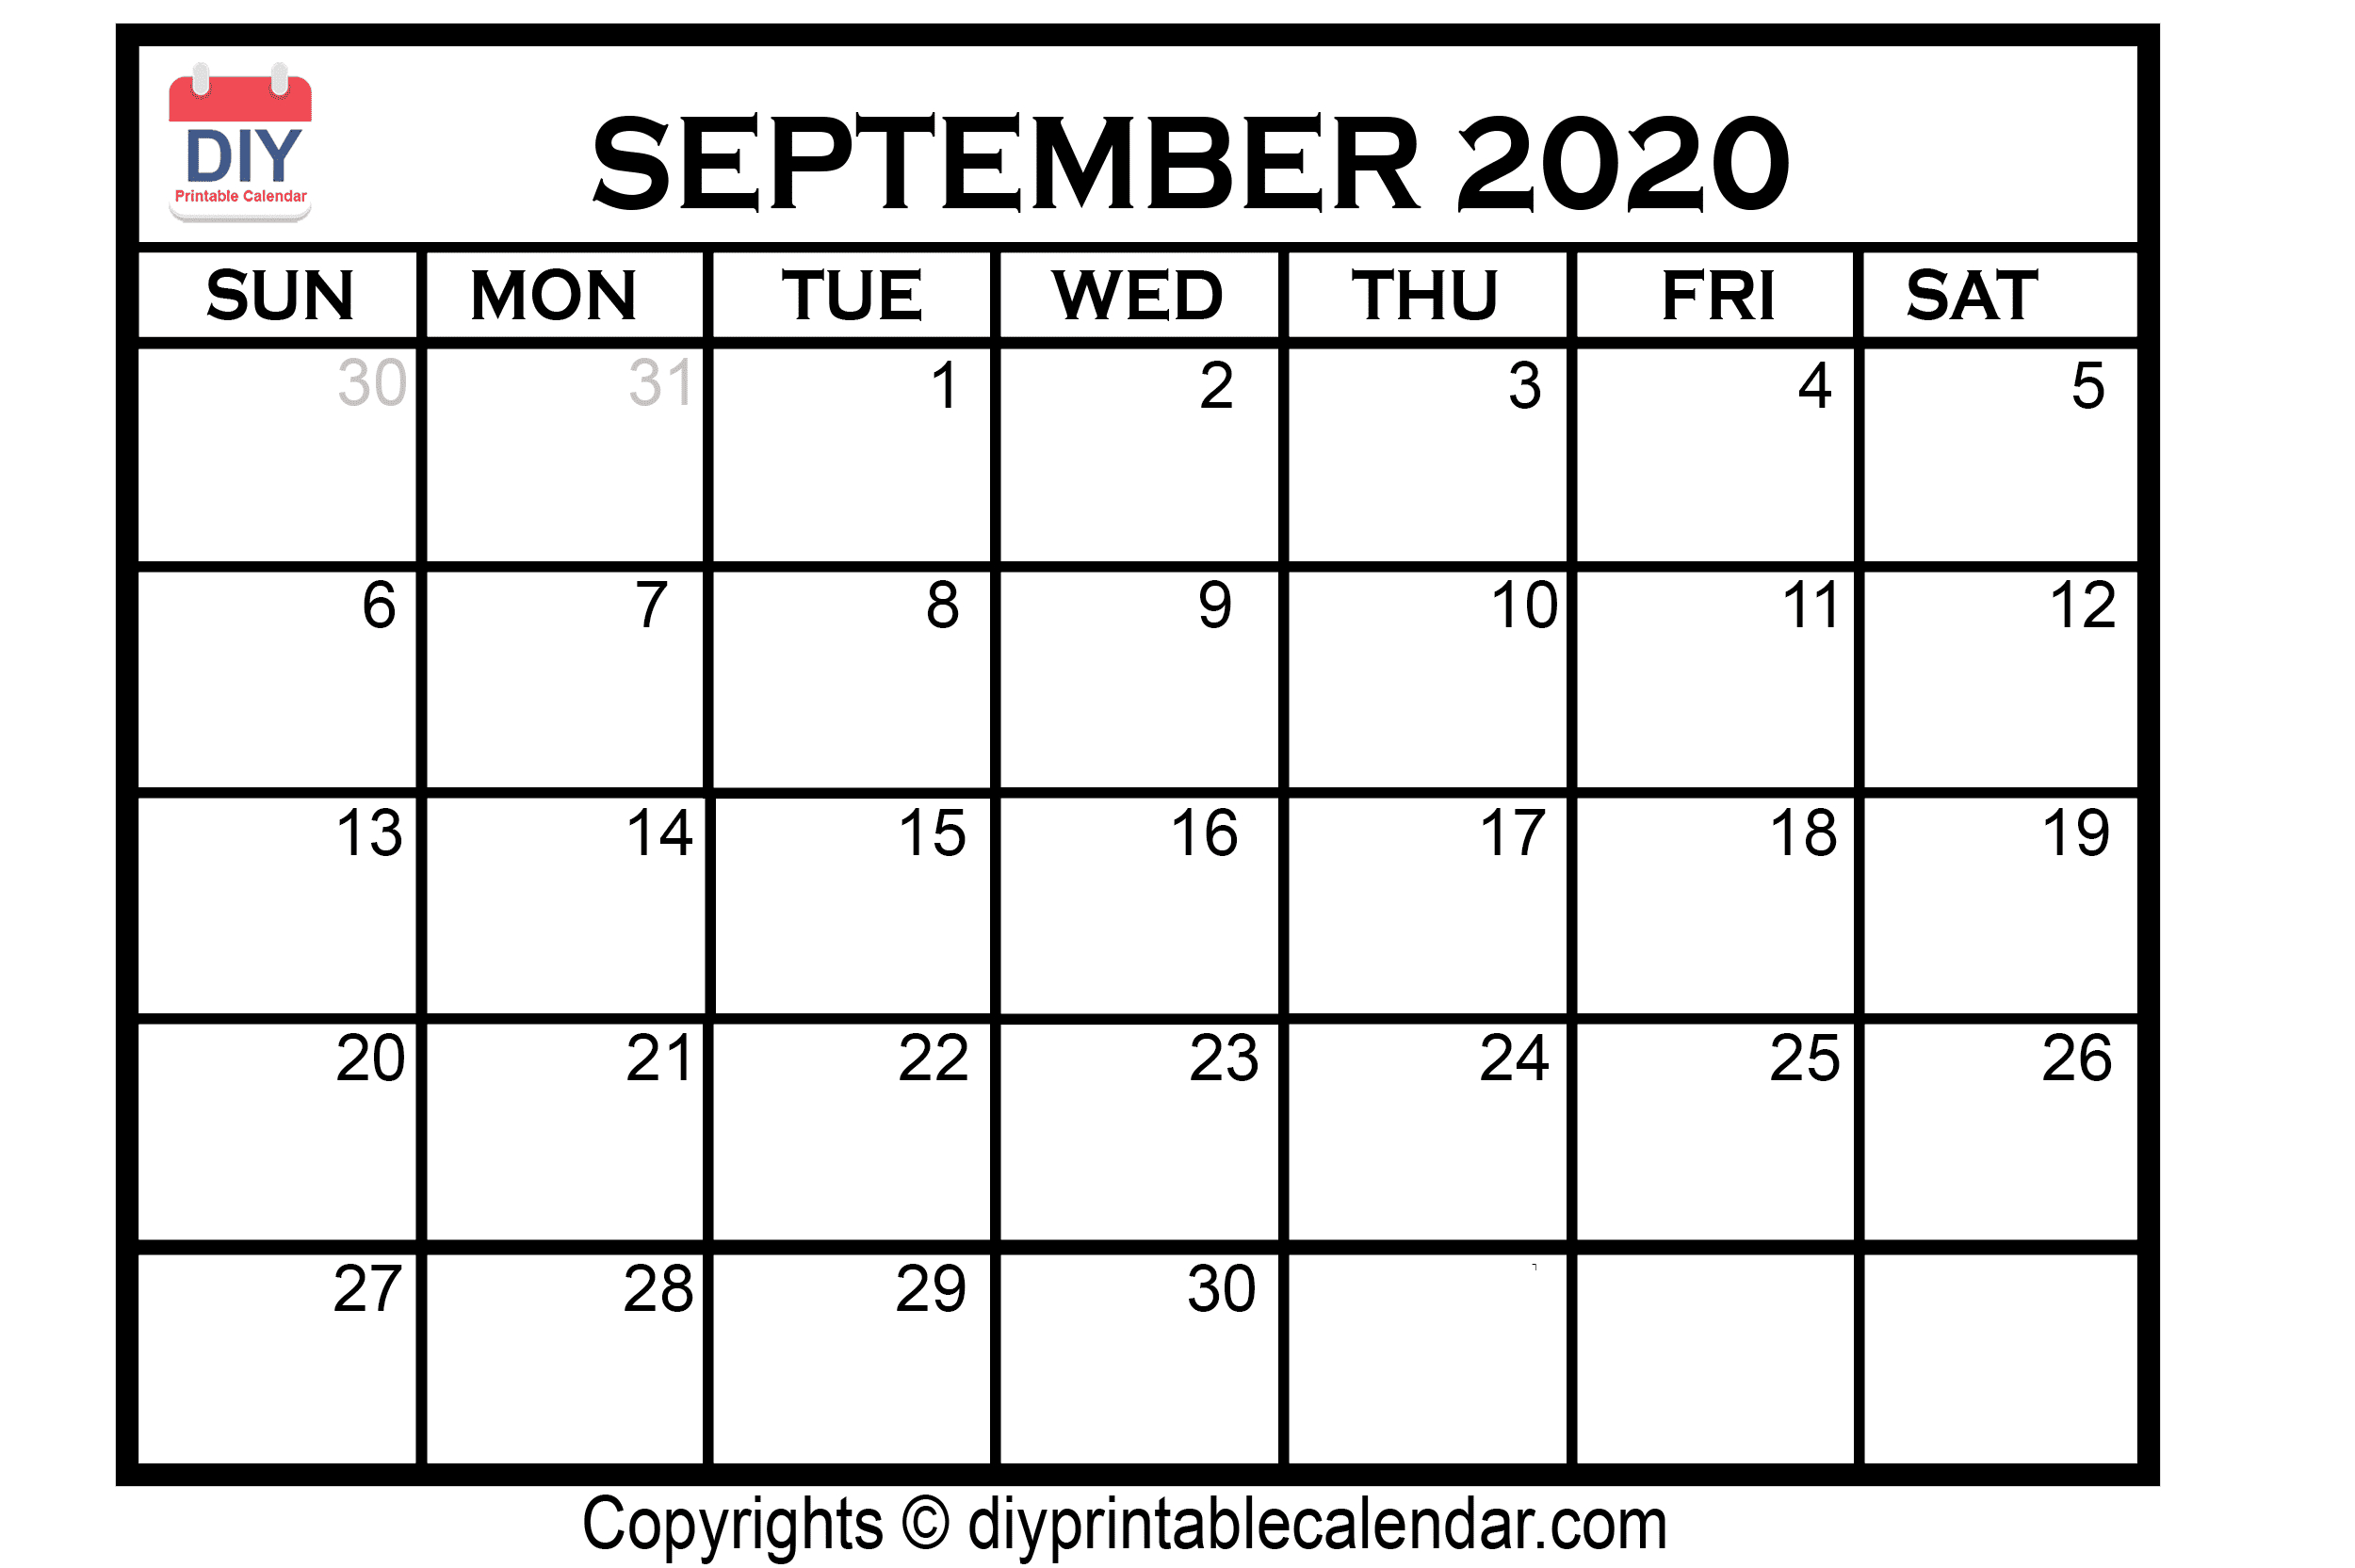 September 2020 Printable Calendar Template regarding September Blank Calendar